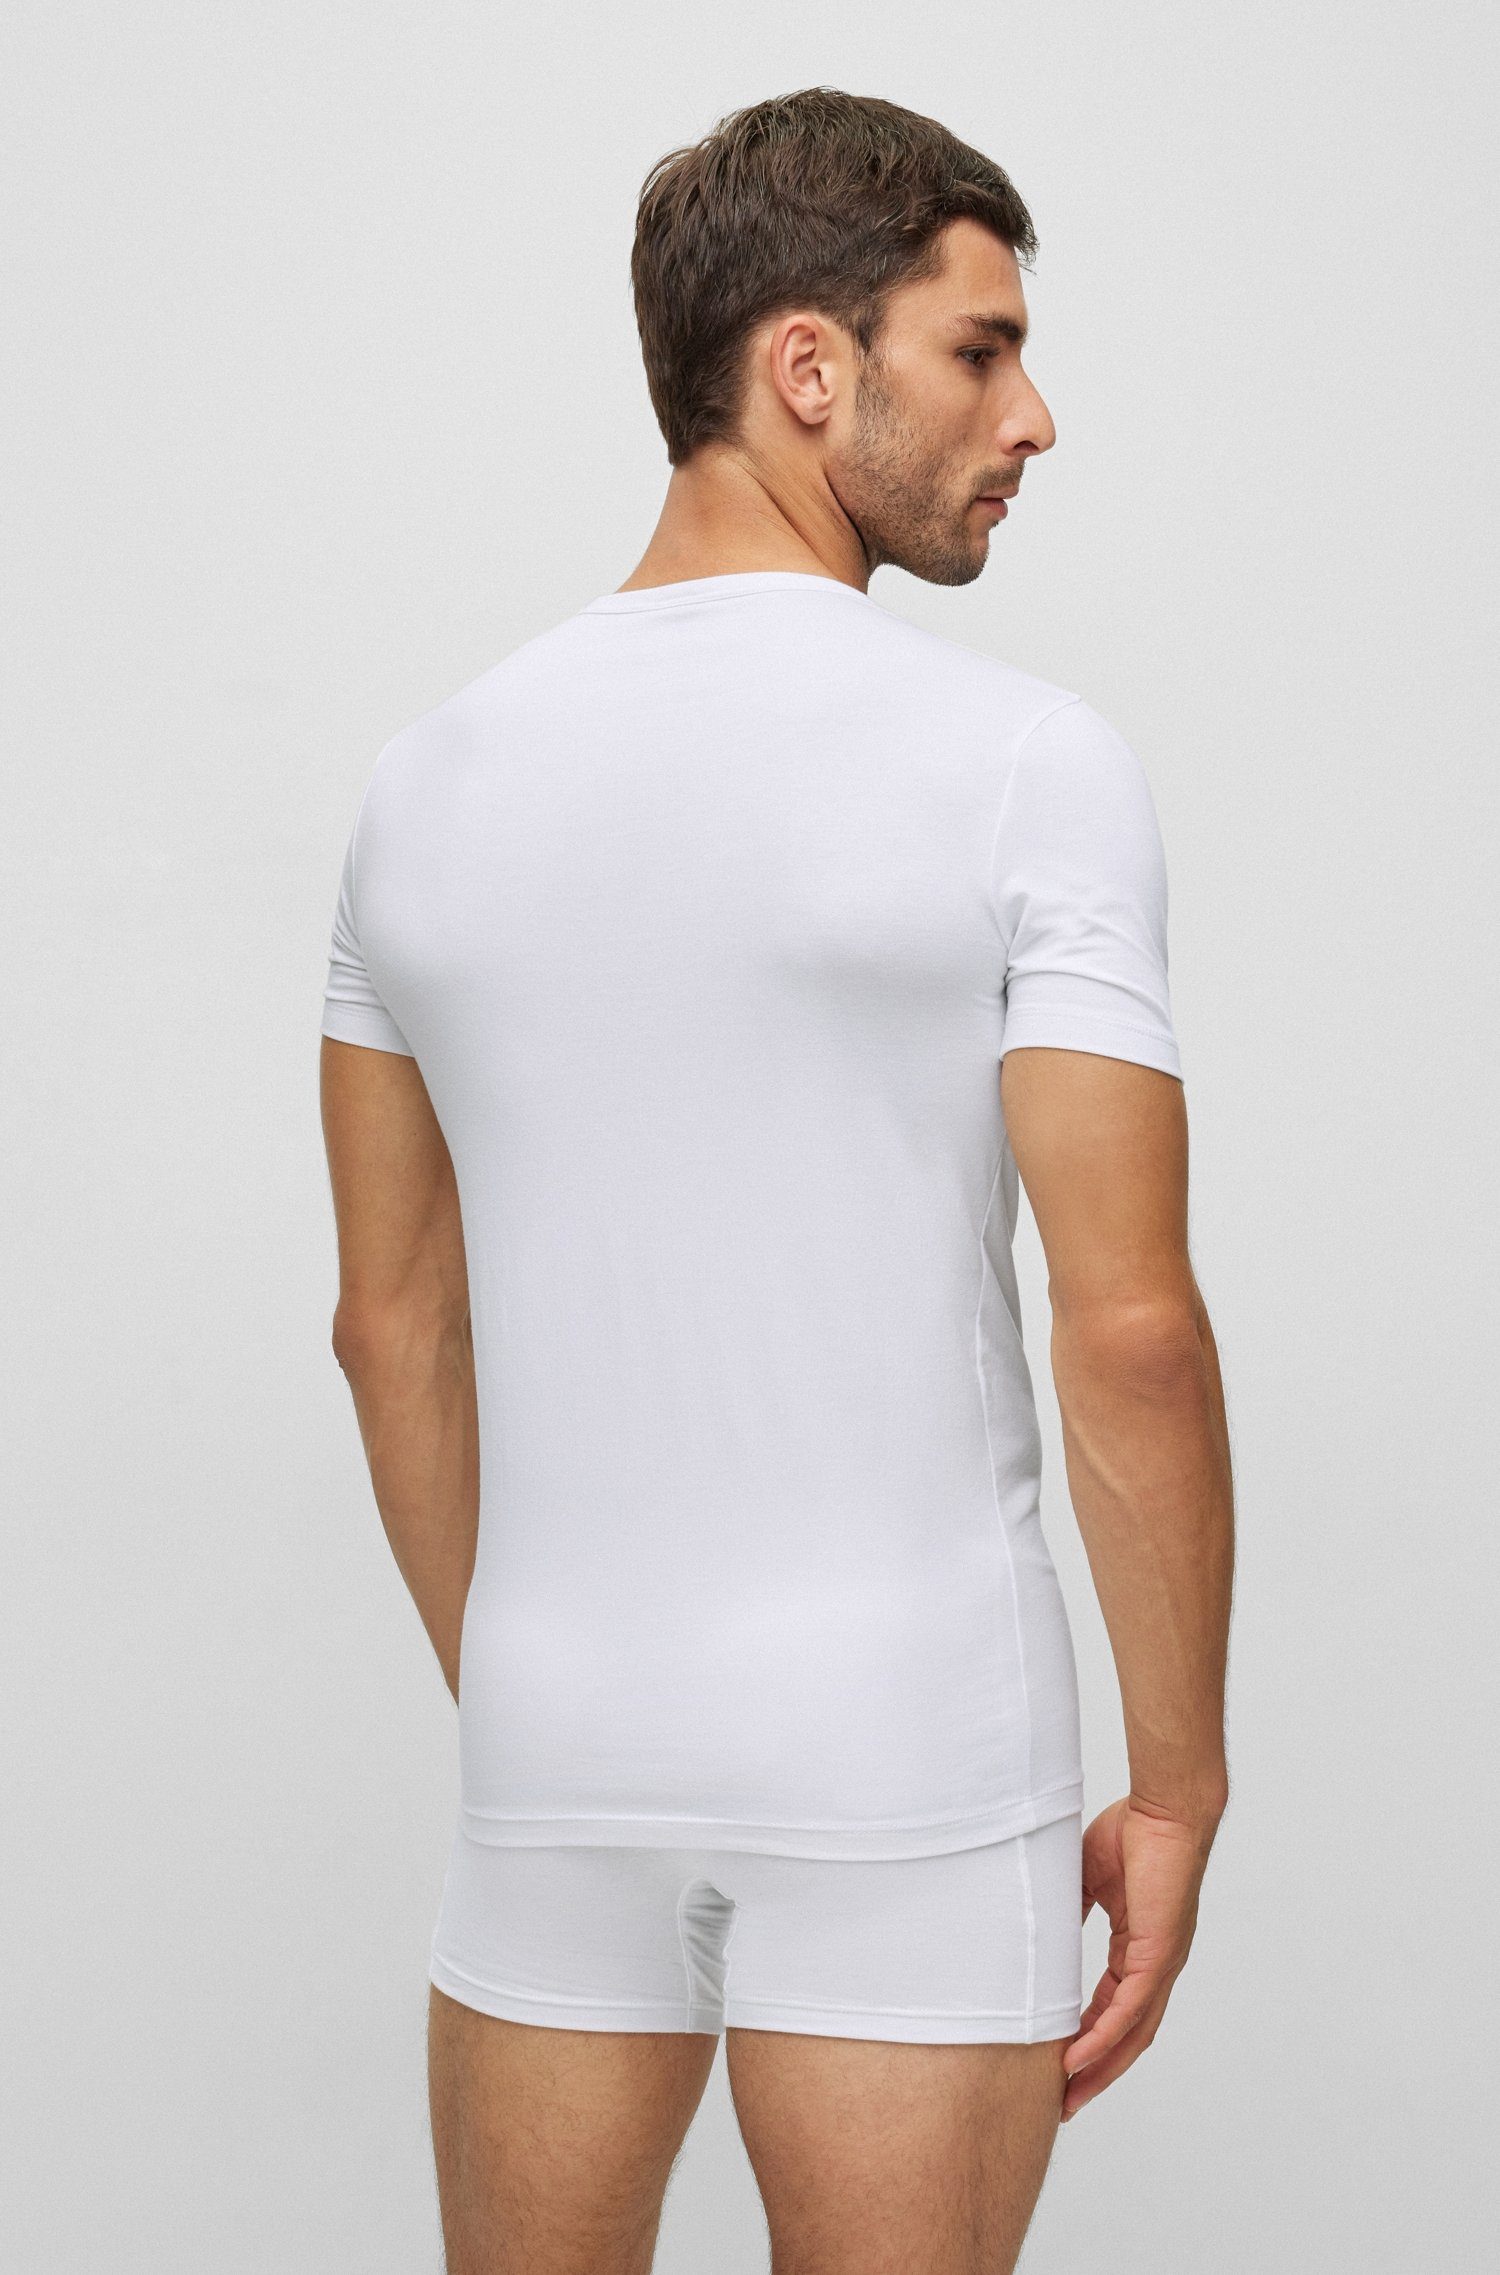 BOSS (2-tlg) TSHIRTVN weiß 2P MODERN T-Shirt